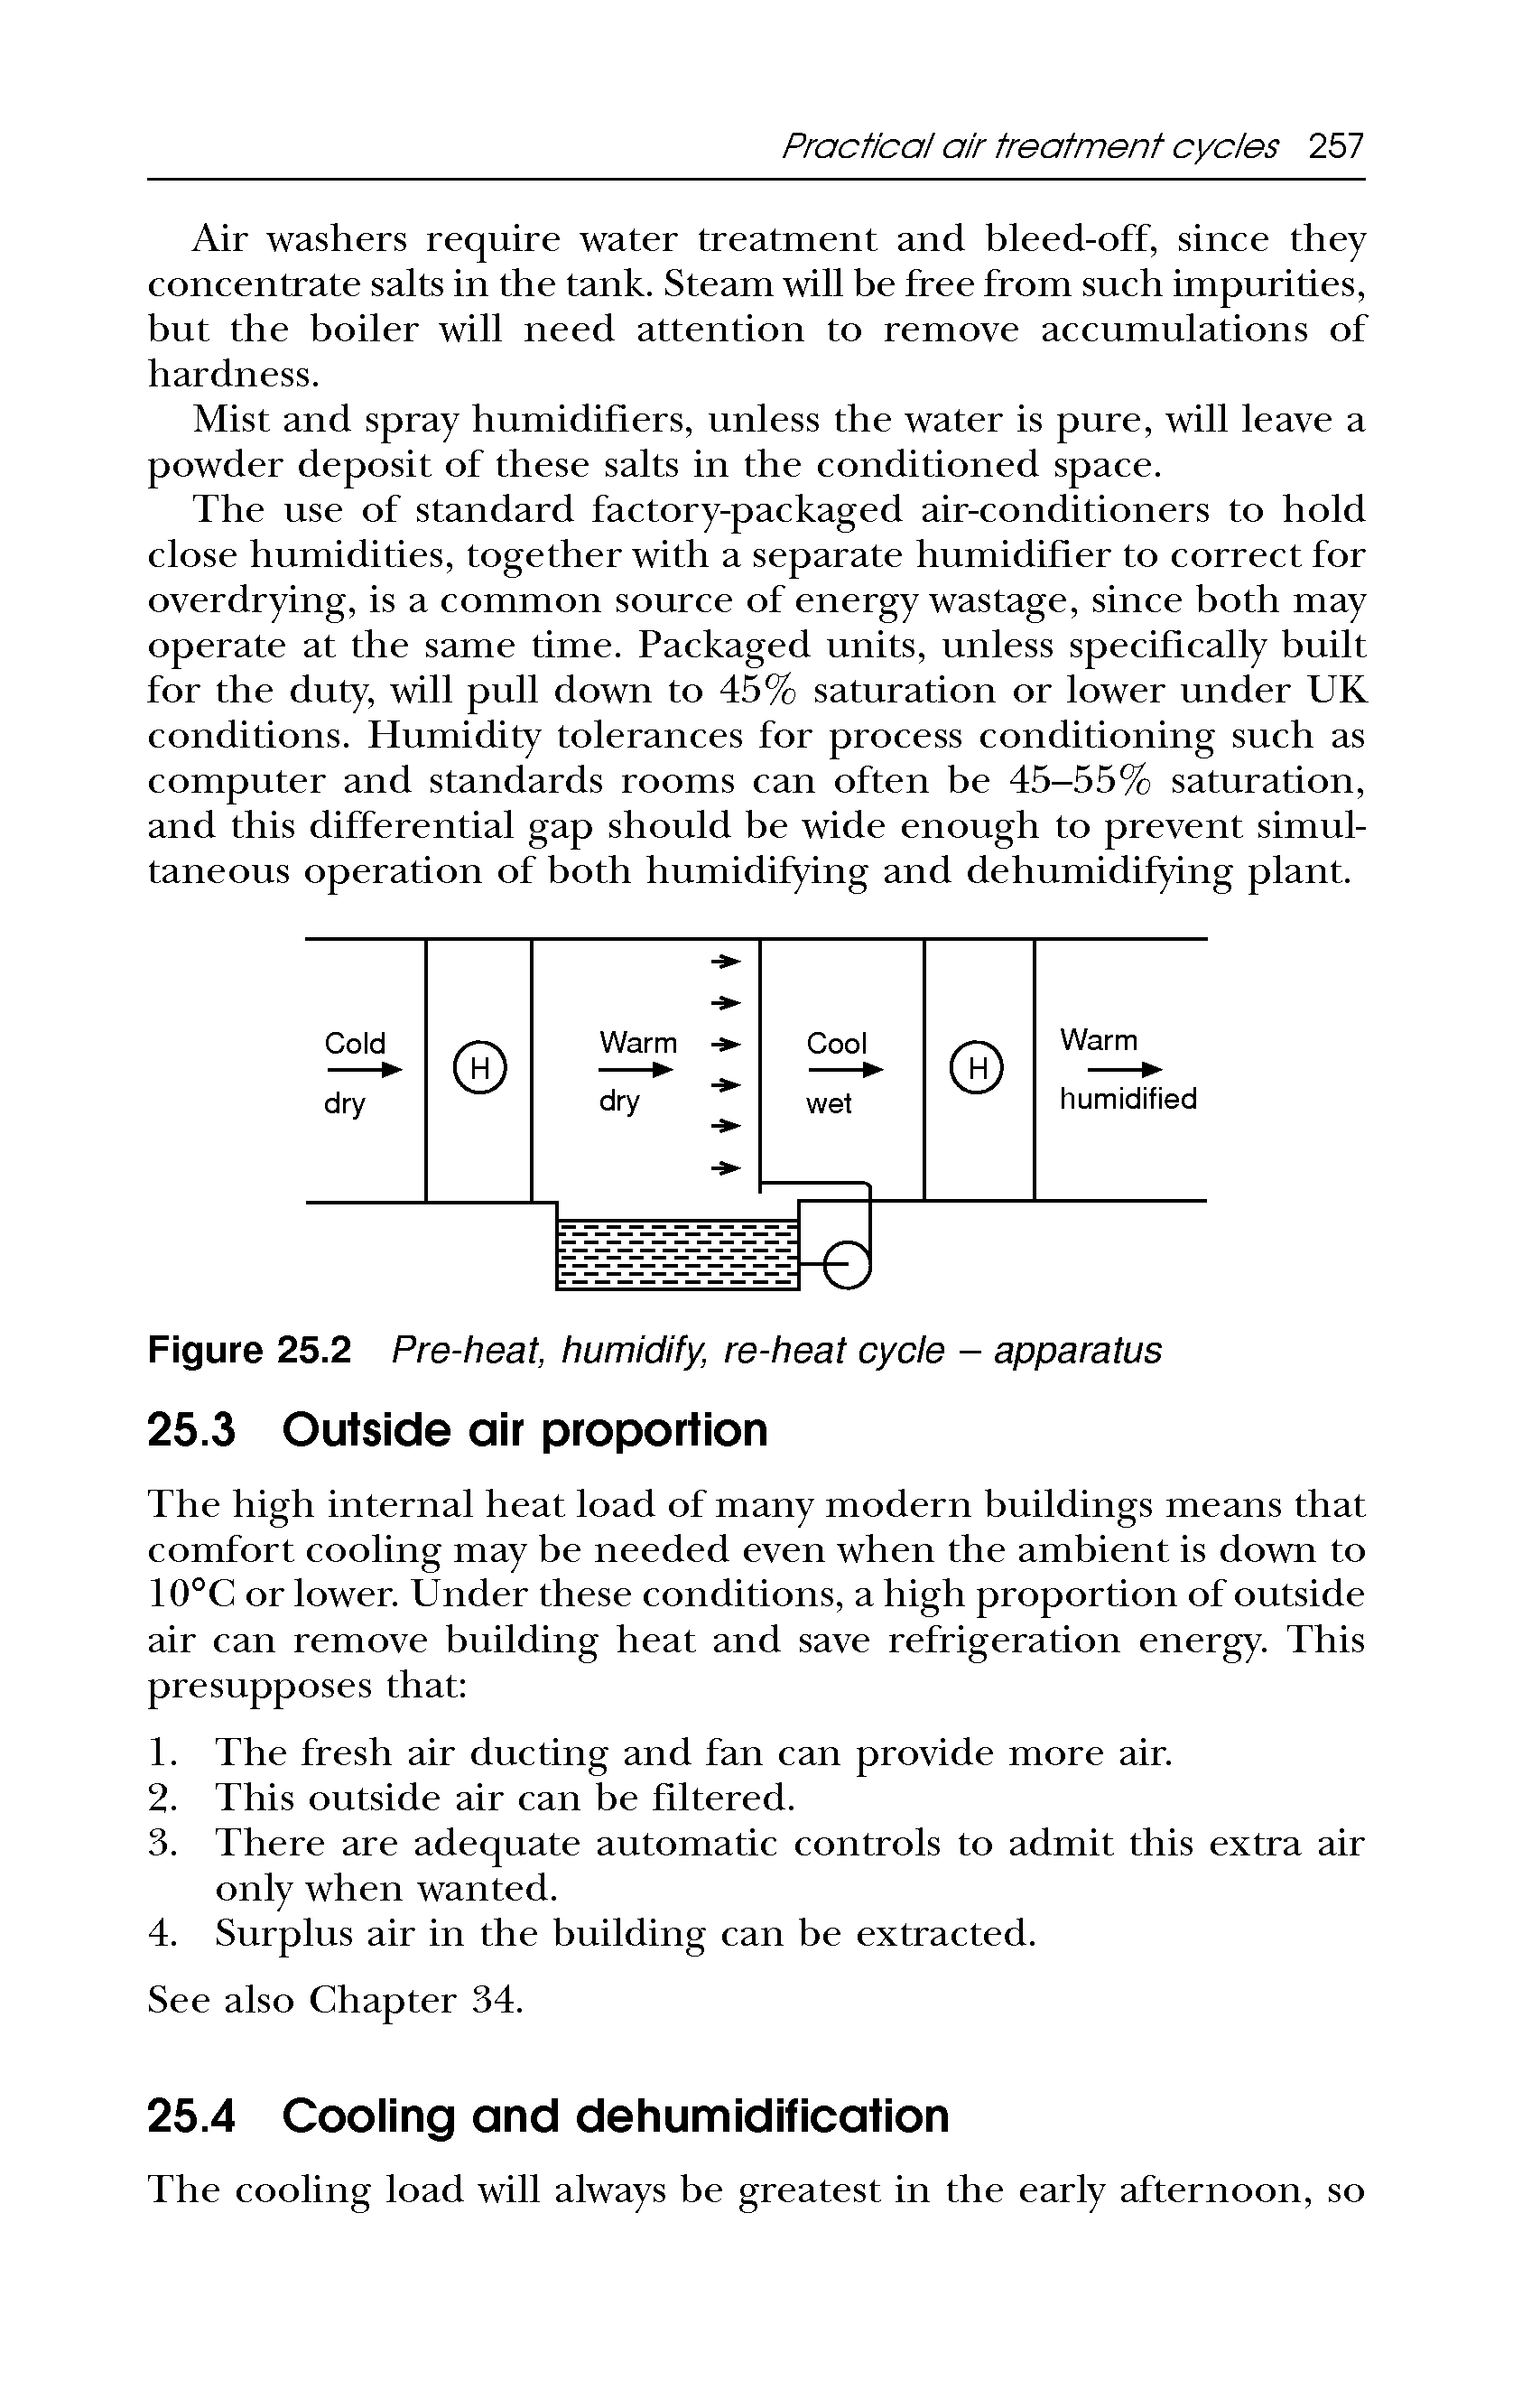 Figure 25.2 Pre-heat, humidify, re-heat cycle - apparatus...